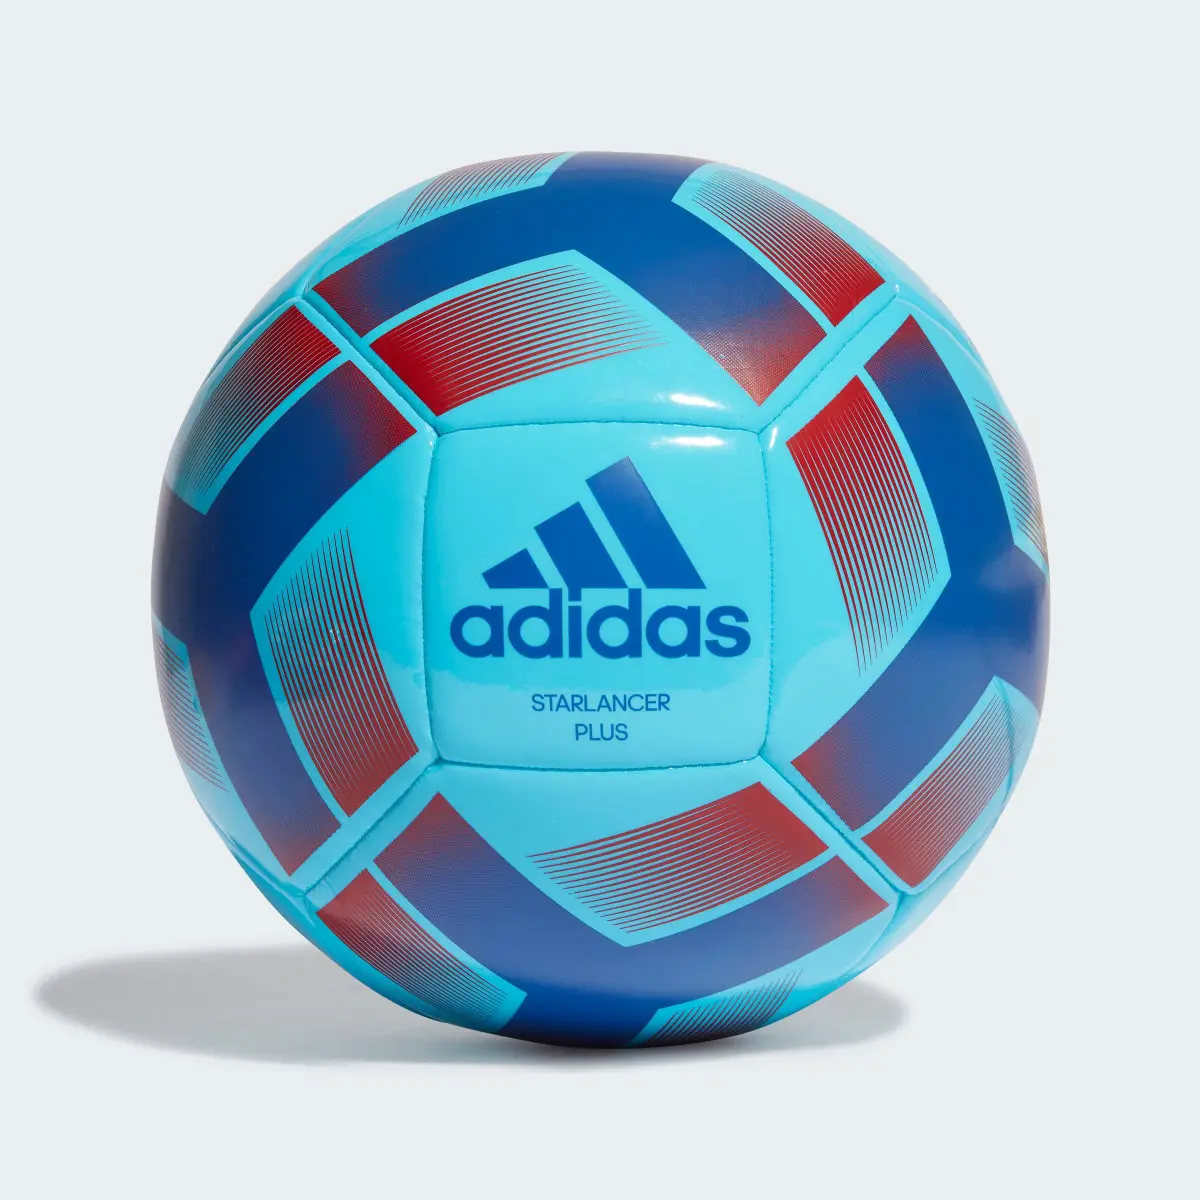 Adidas Starlancer Plus Ball. 3